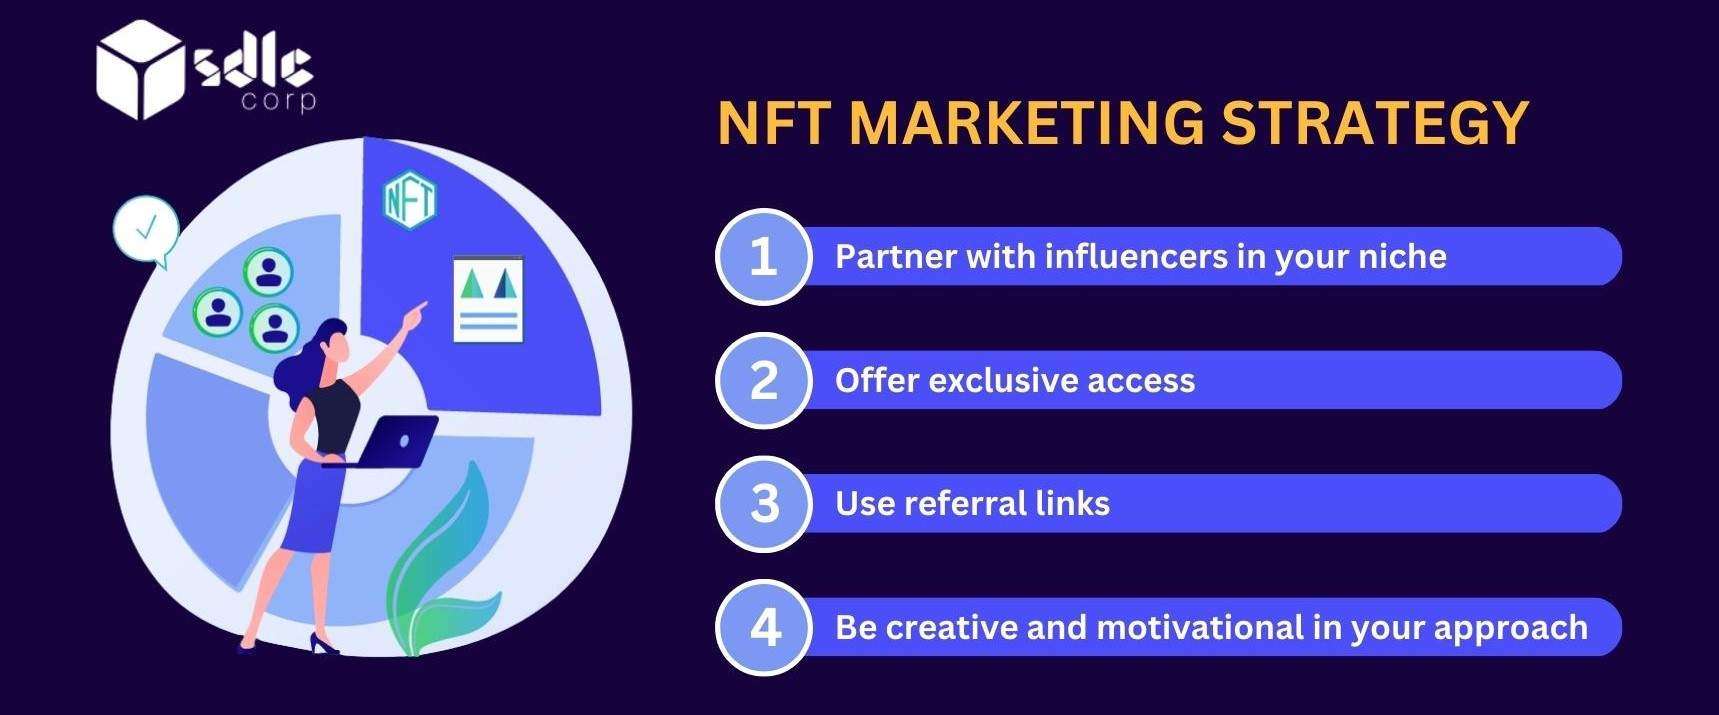 NFT Marketing Strategy - SDLC Corp